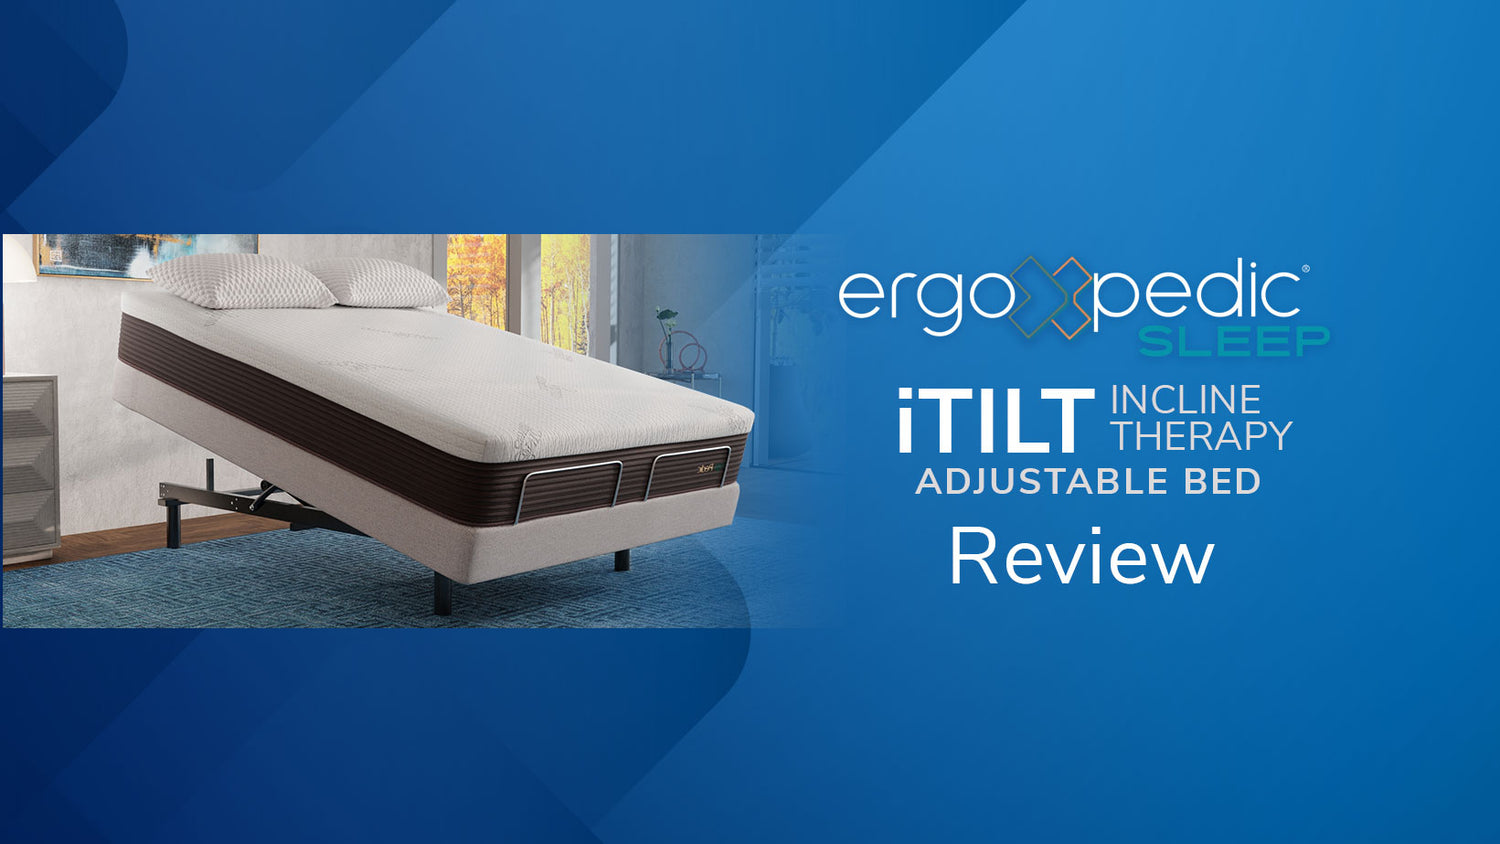 Ergo-Pedic iTilt Adjustable Base: A Revolutionary Solution for GERD and Comfortable Sleep